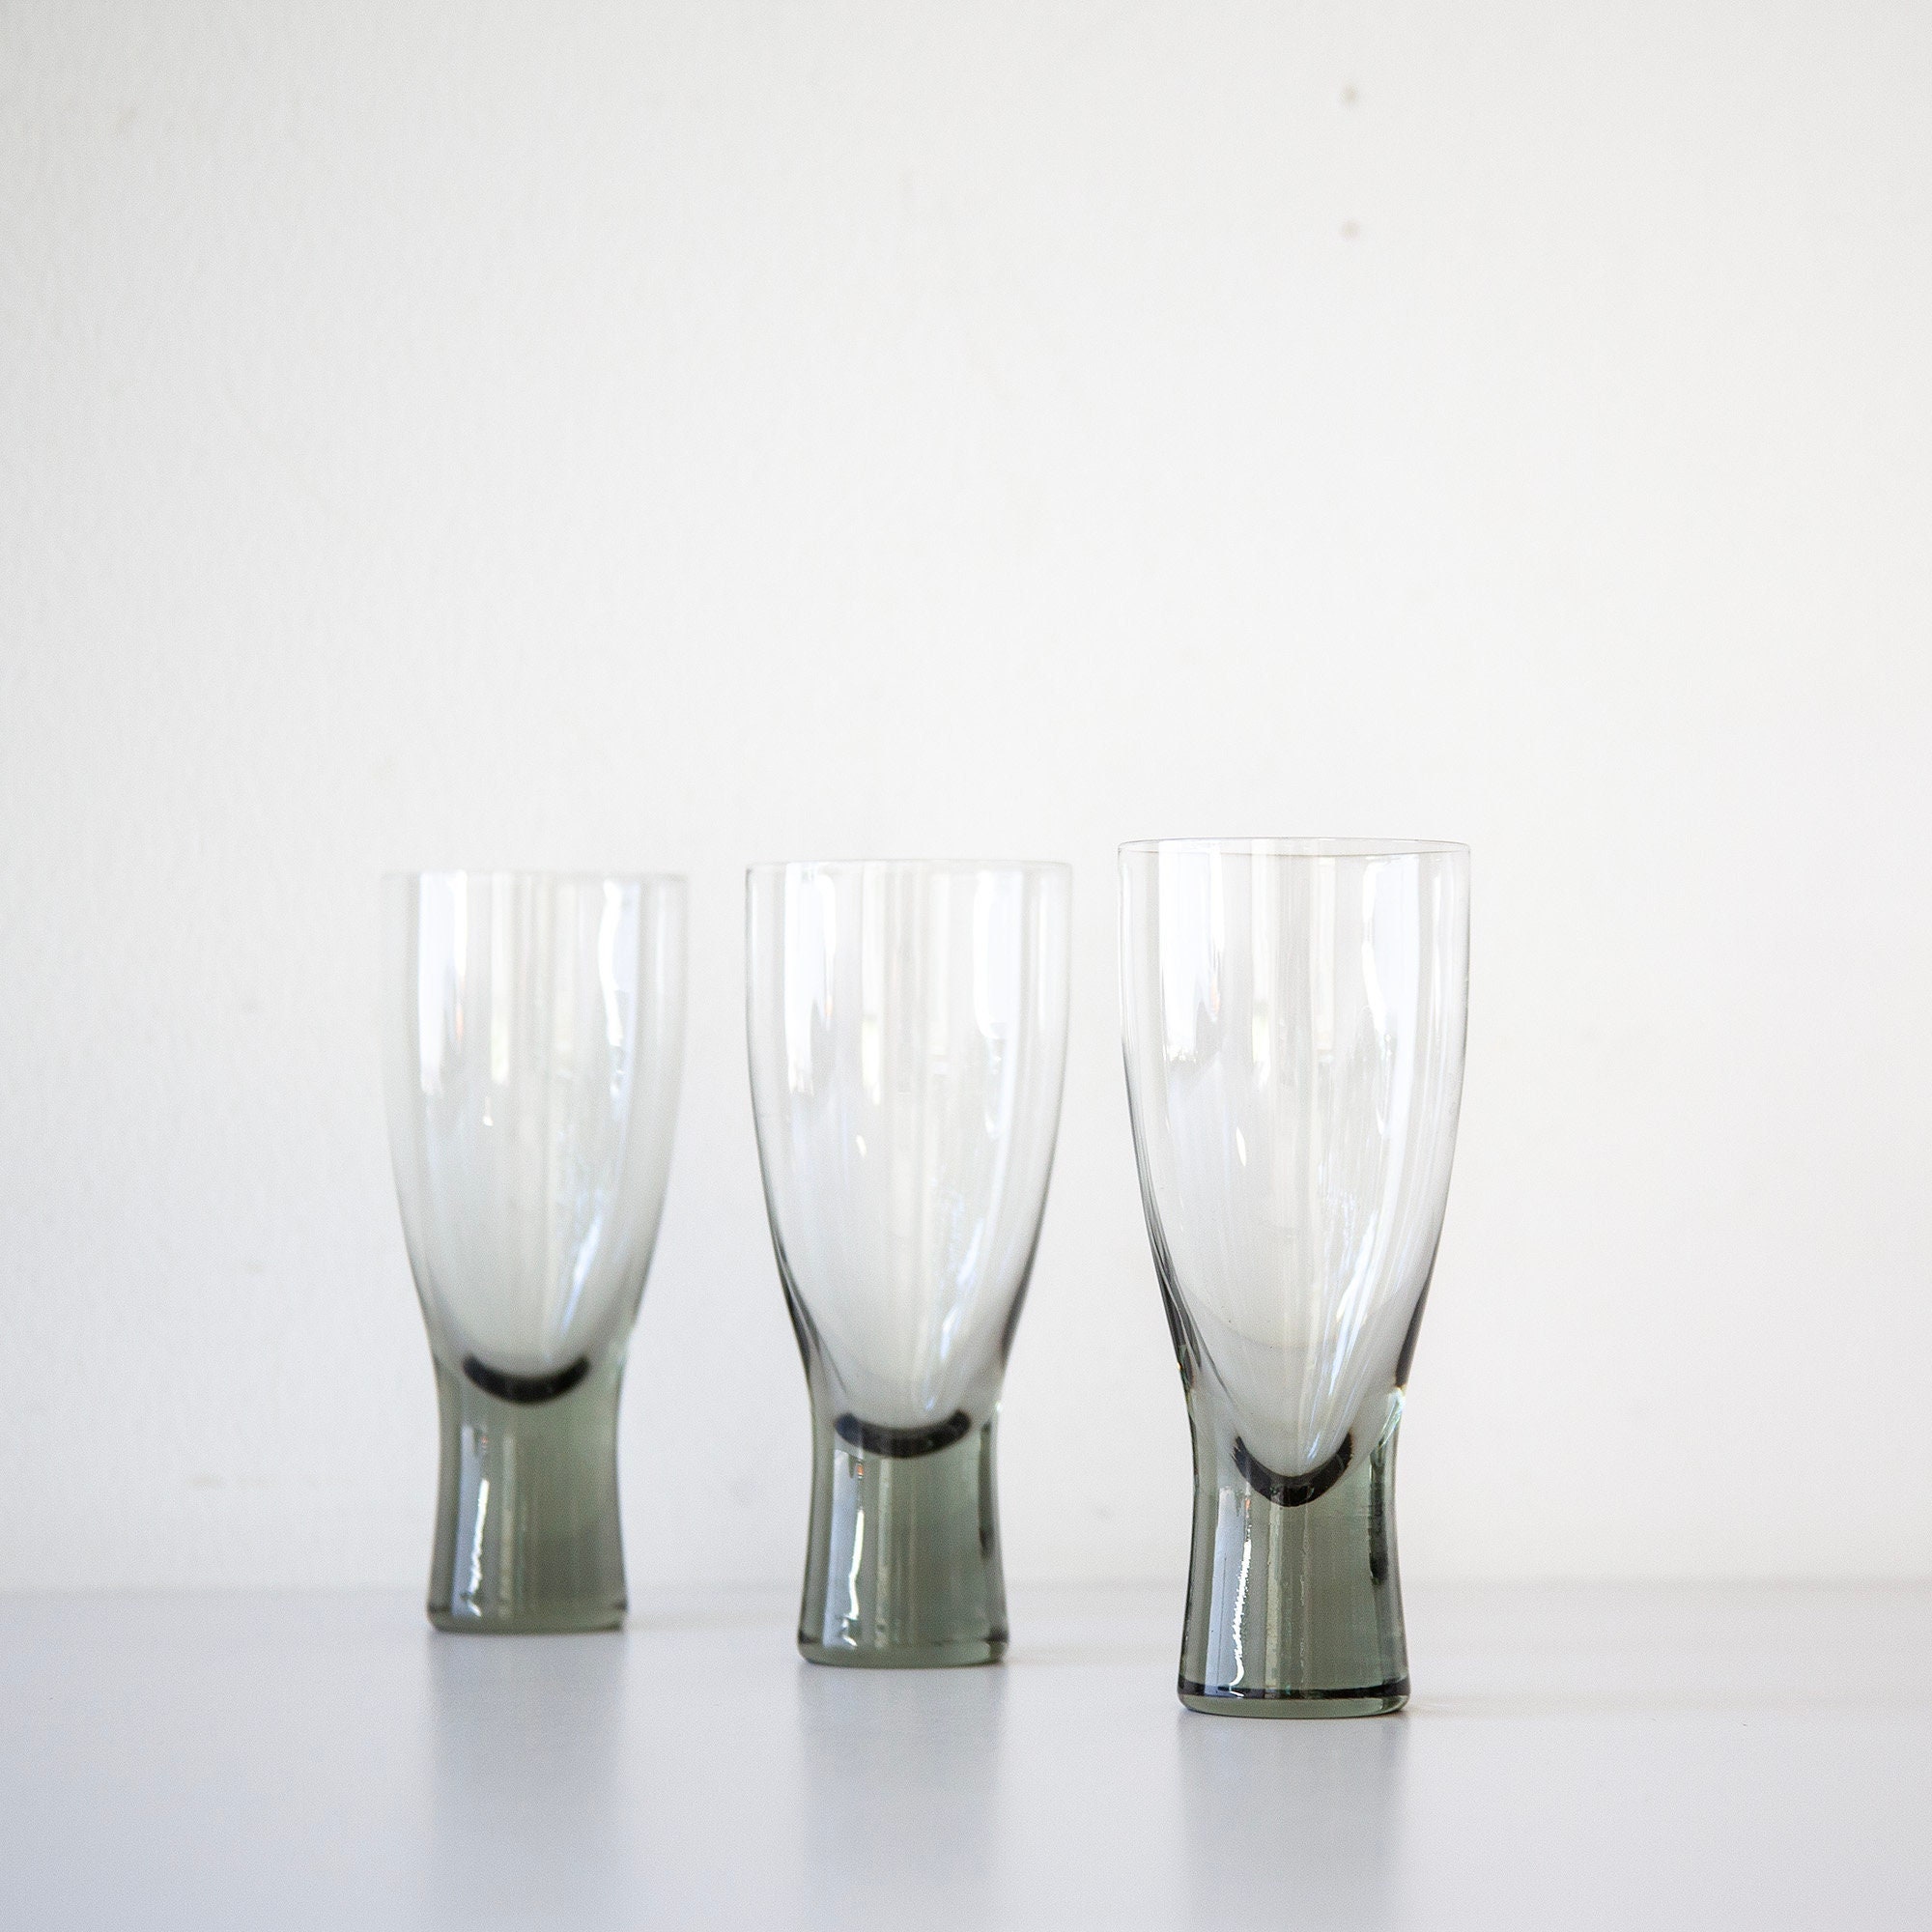 Holmegaard® Perfection Beer Glasses, Set of 6